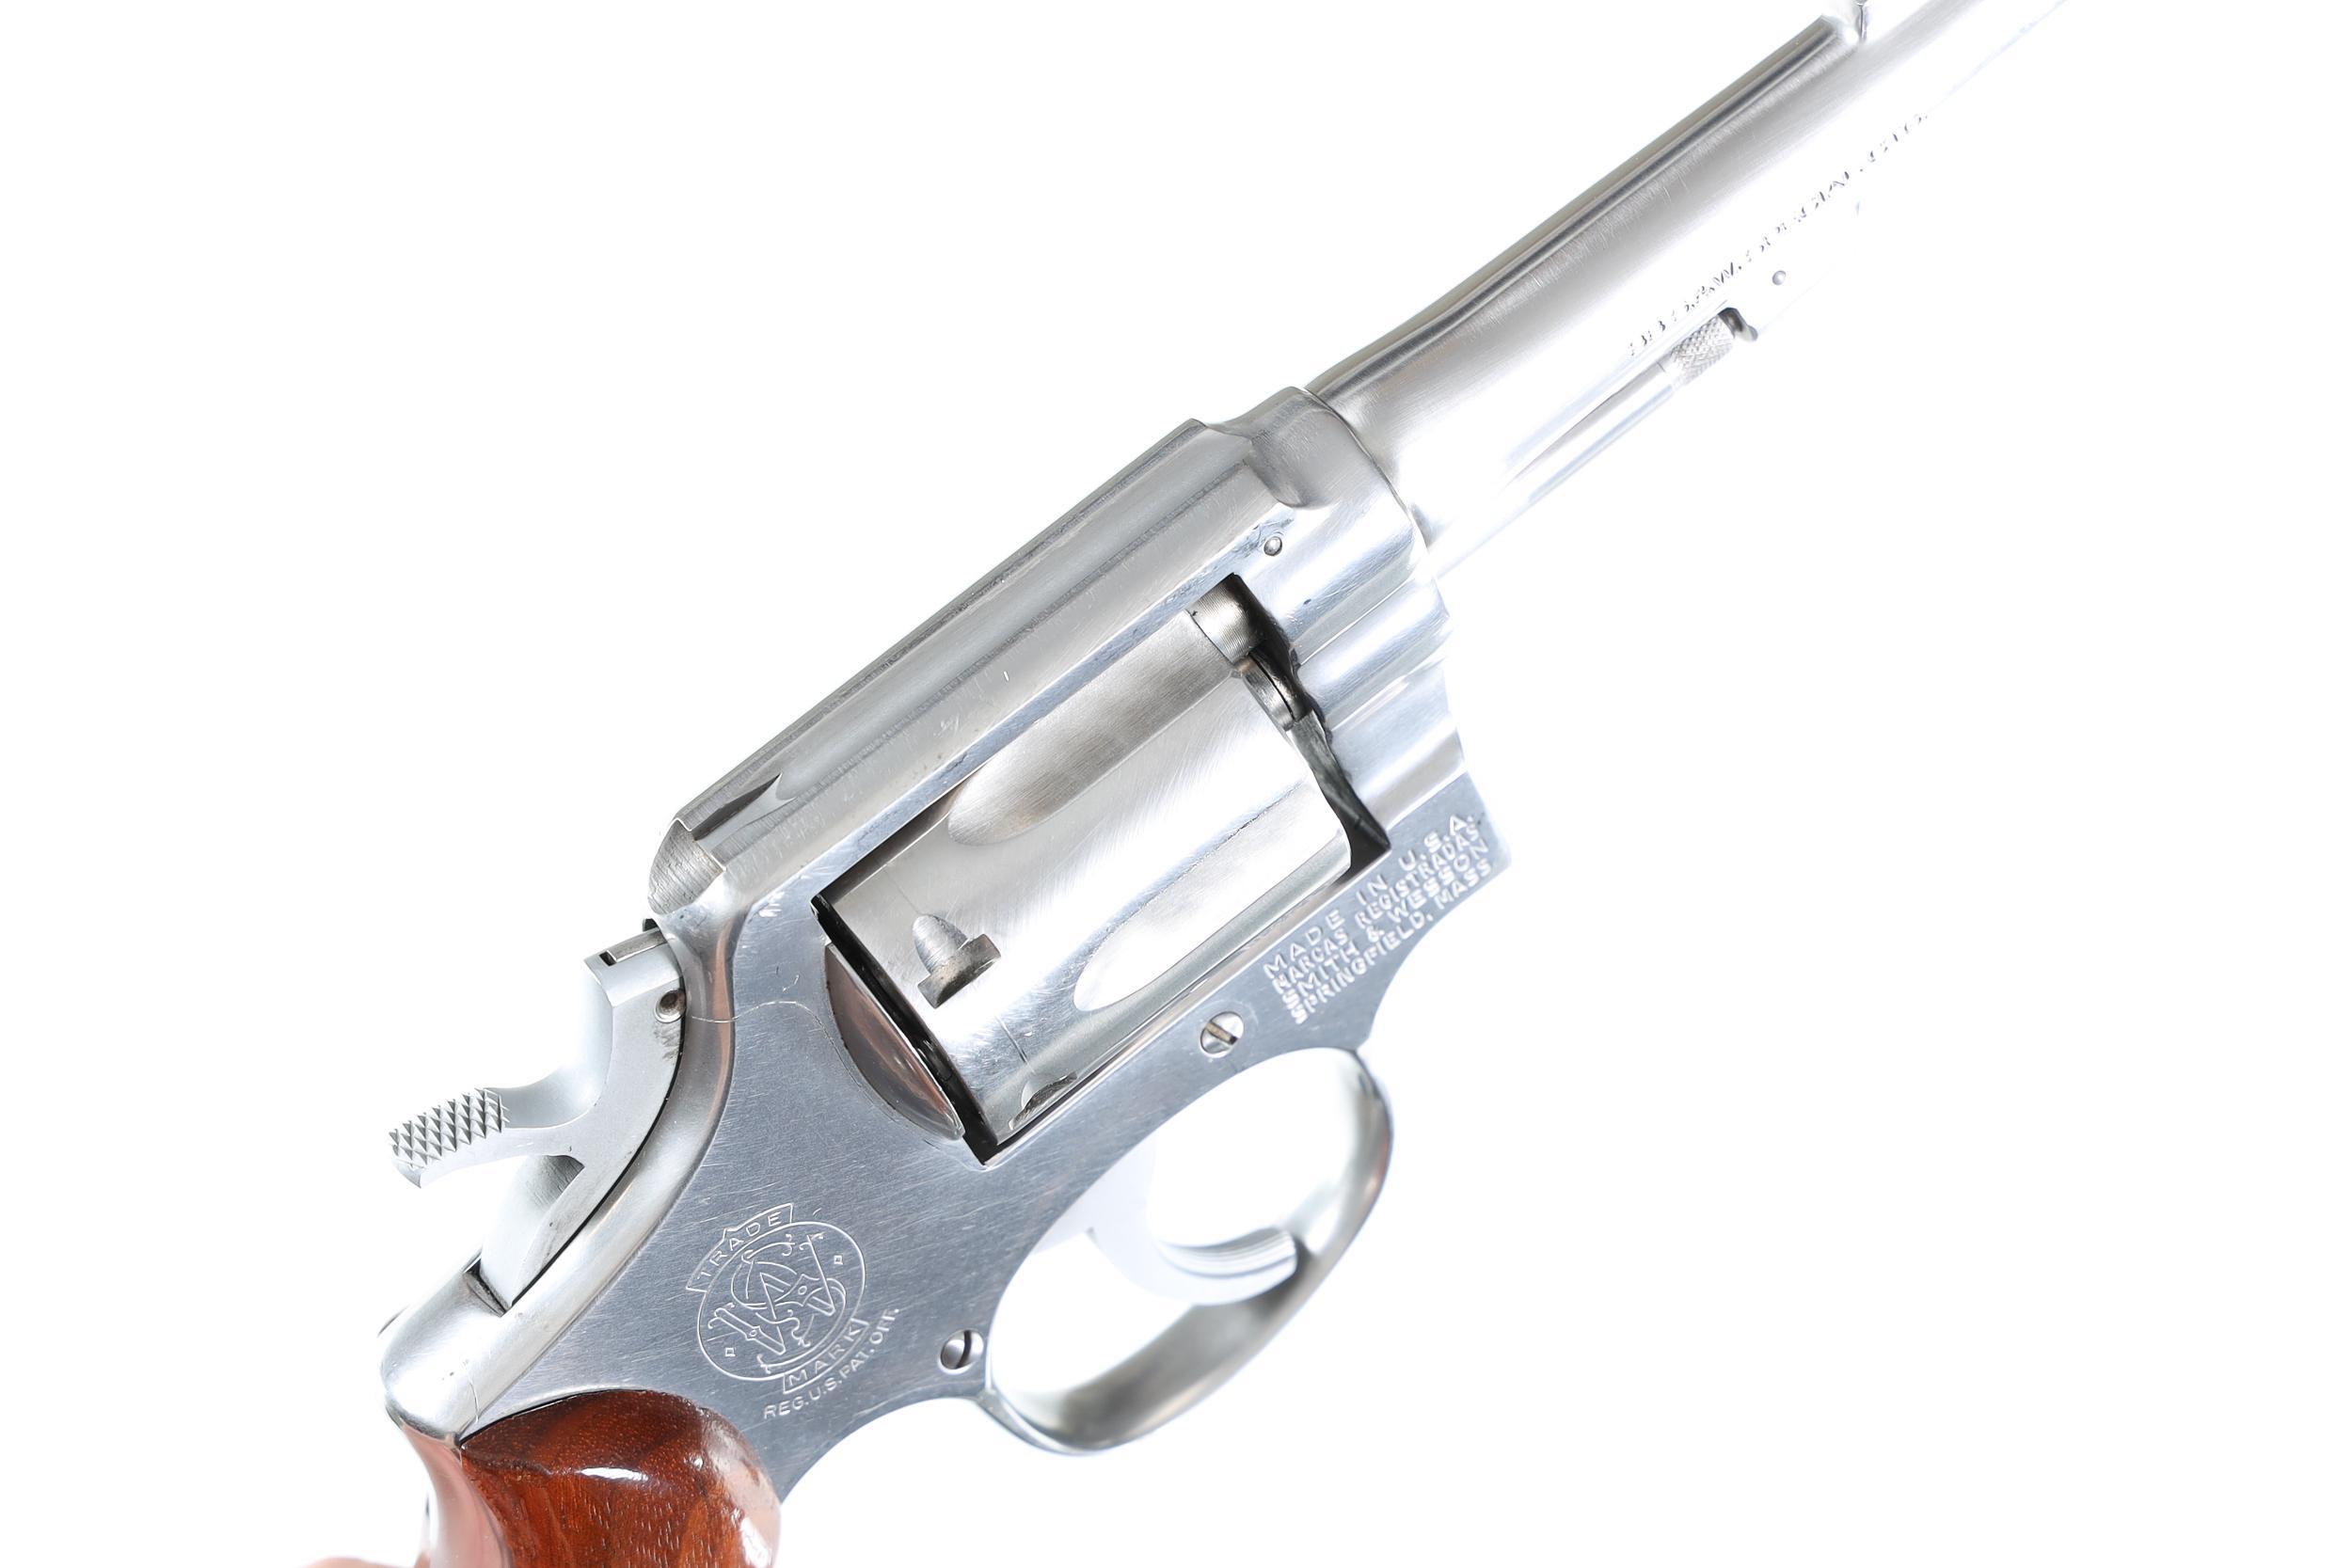 Smith & Wesson 64 Revolver .38 spl